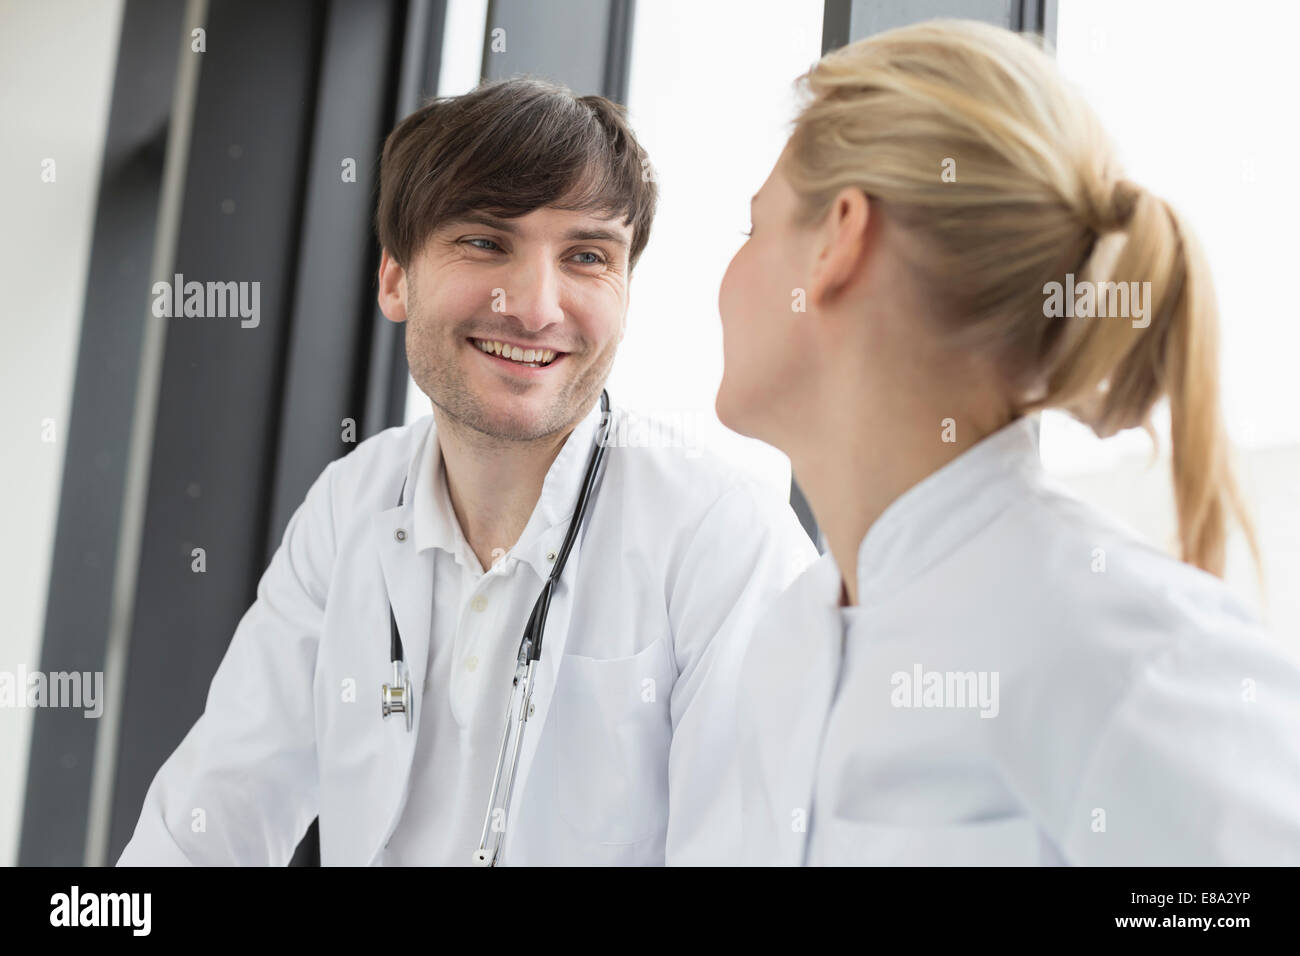 Doctors having conversation, smiling Stock Photo